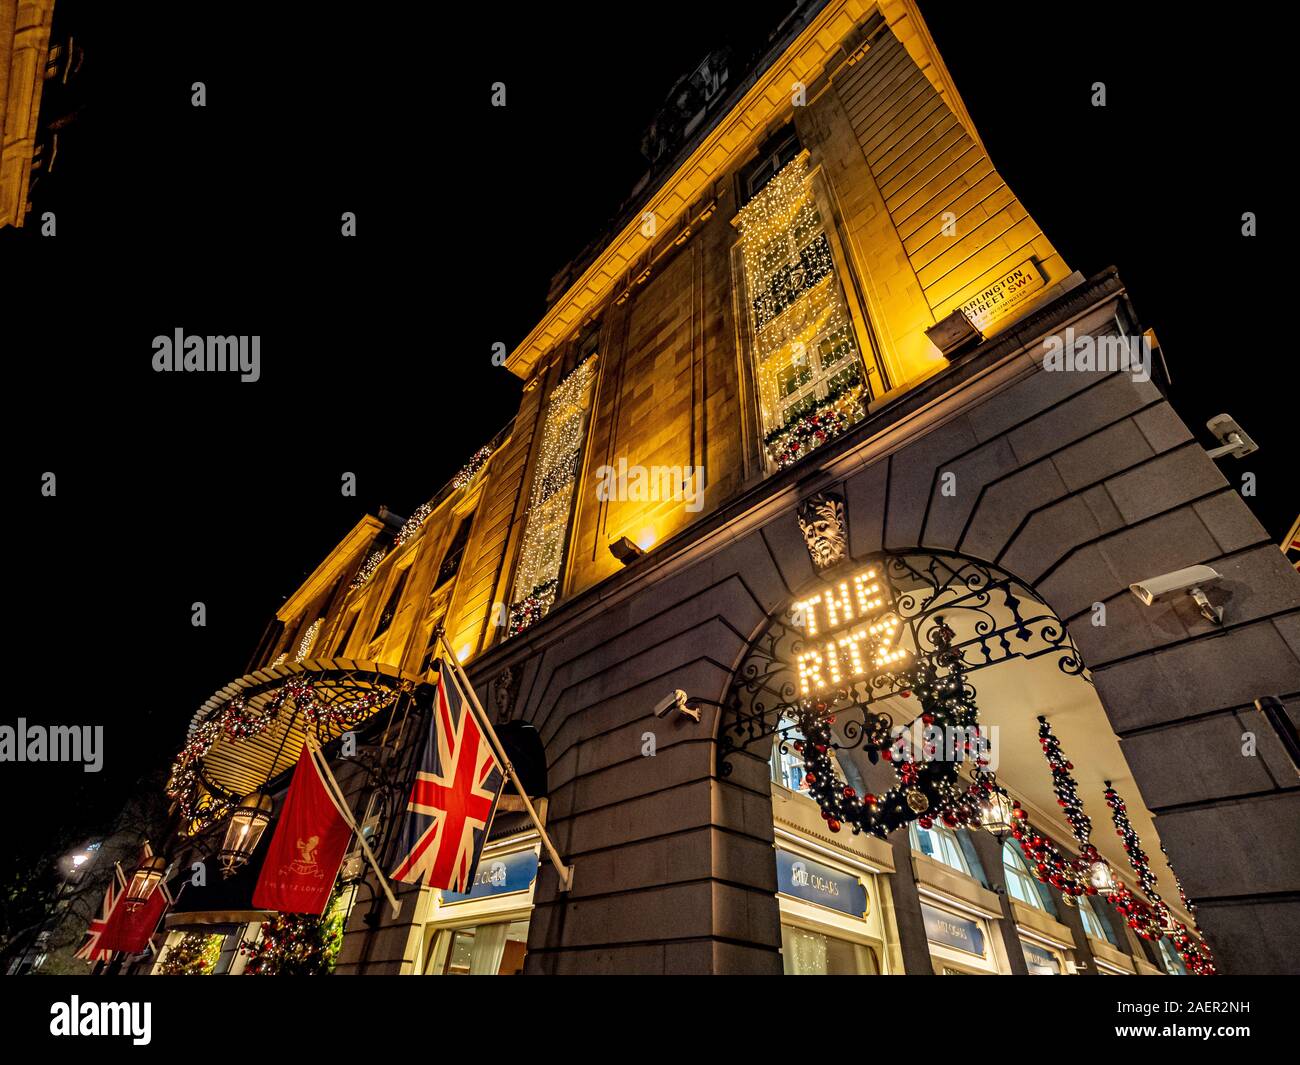 The Ritz hotel exterior at Christmas, London, UK. Stock Photo